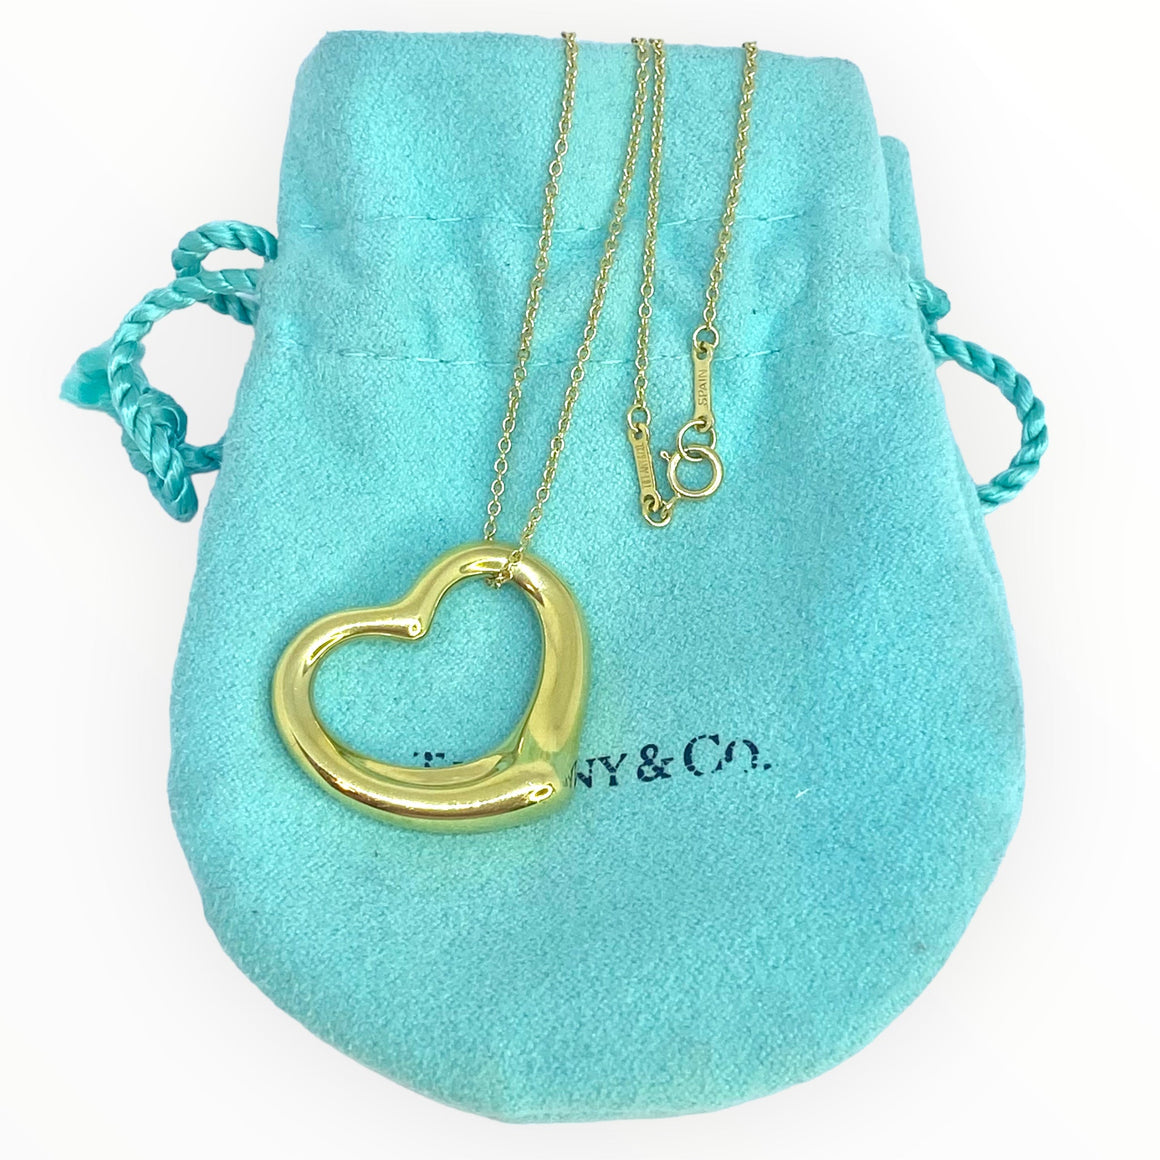 Tiffany & Co. Elsa Peretti 18K Yellow Gold Open Heart Pendant Necklace